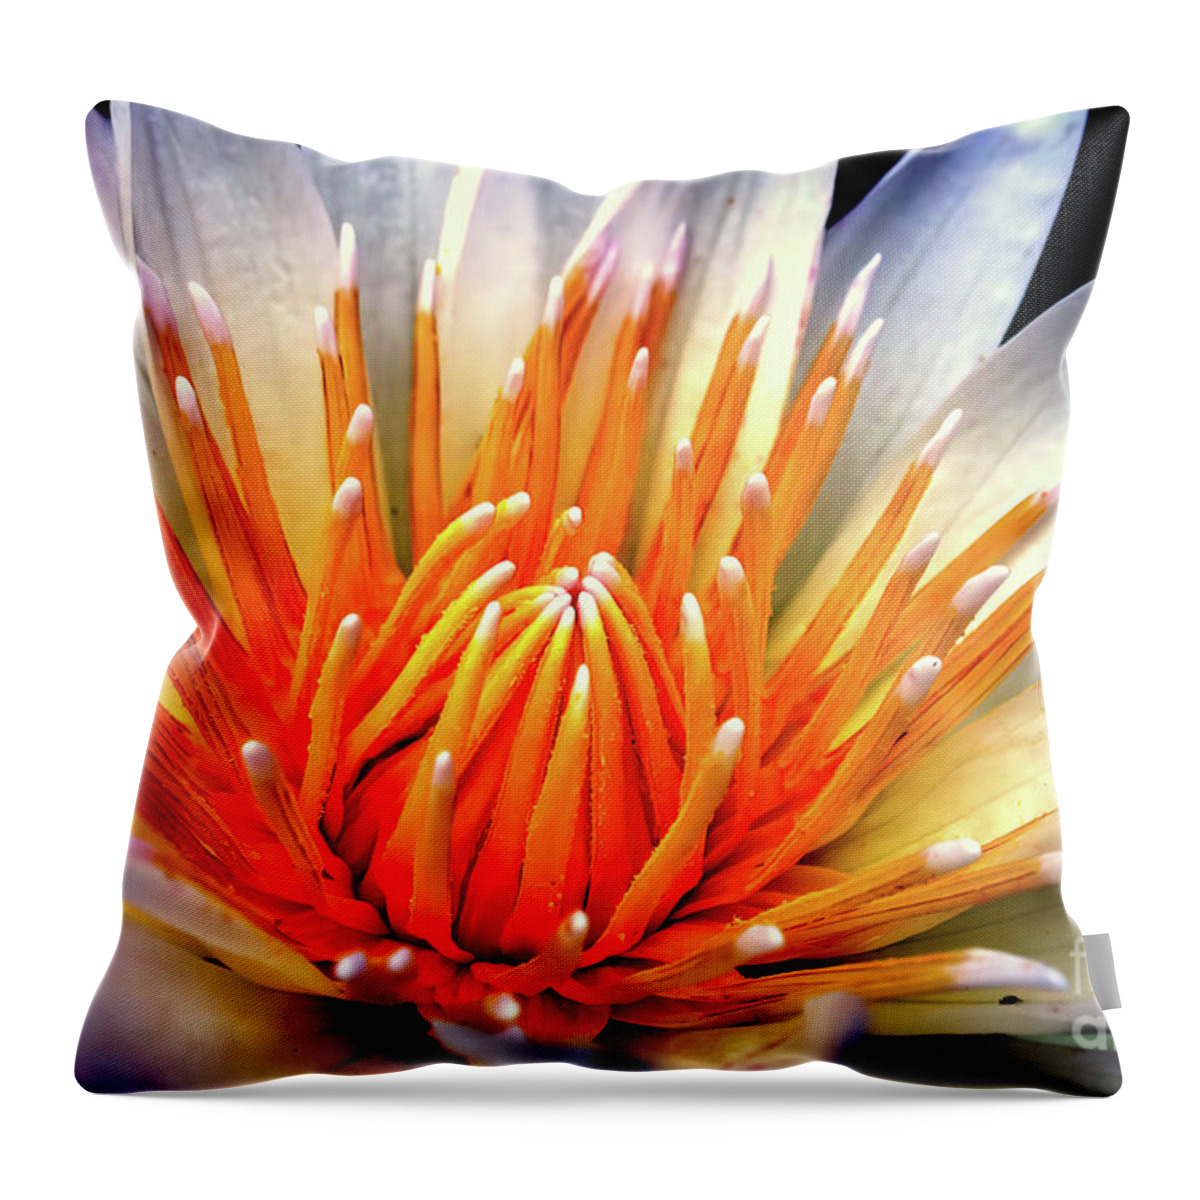 Water Throw Pillow featuring the photograph Water Lily Flower by Jolanta Anna Karolska